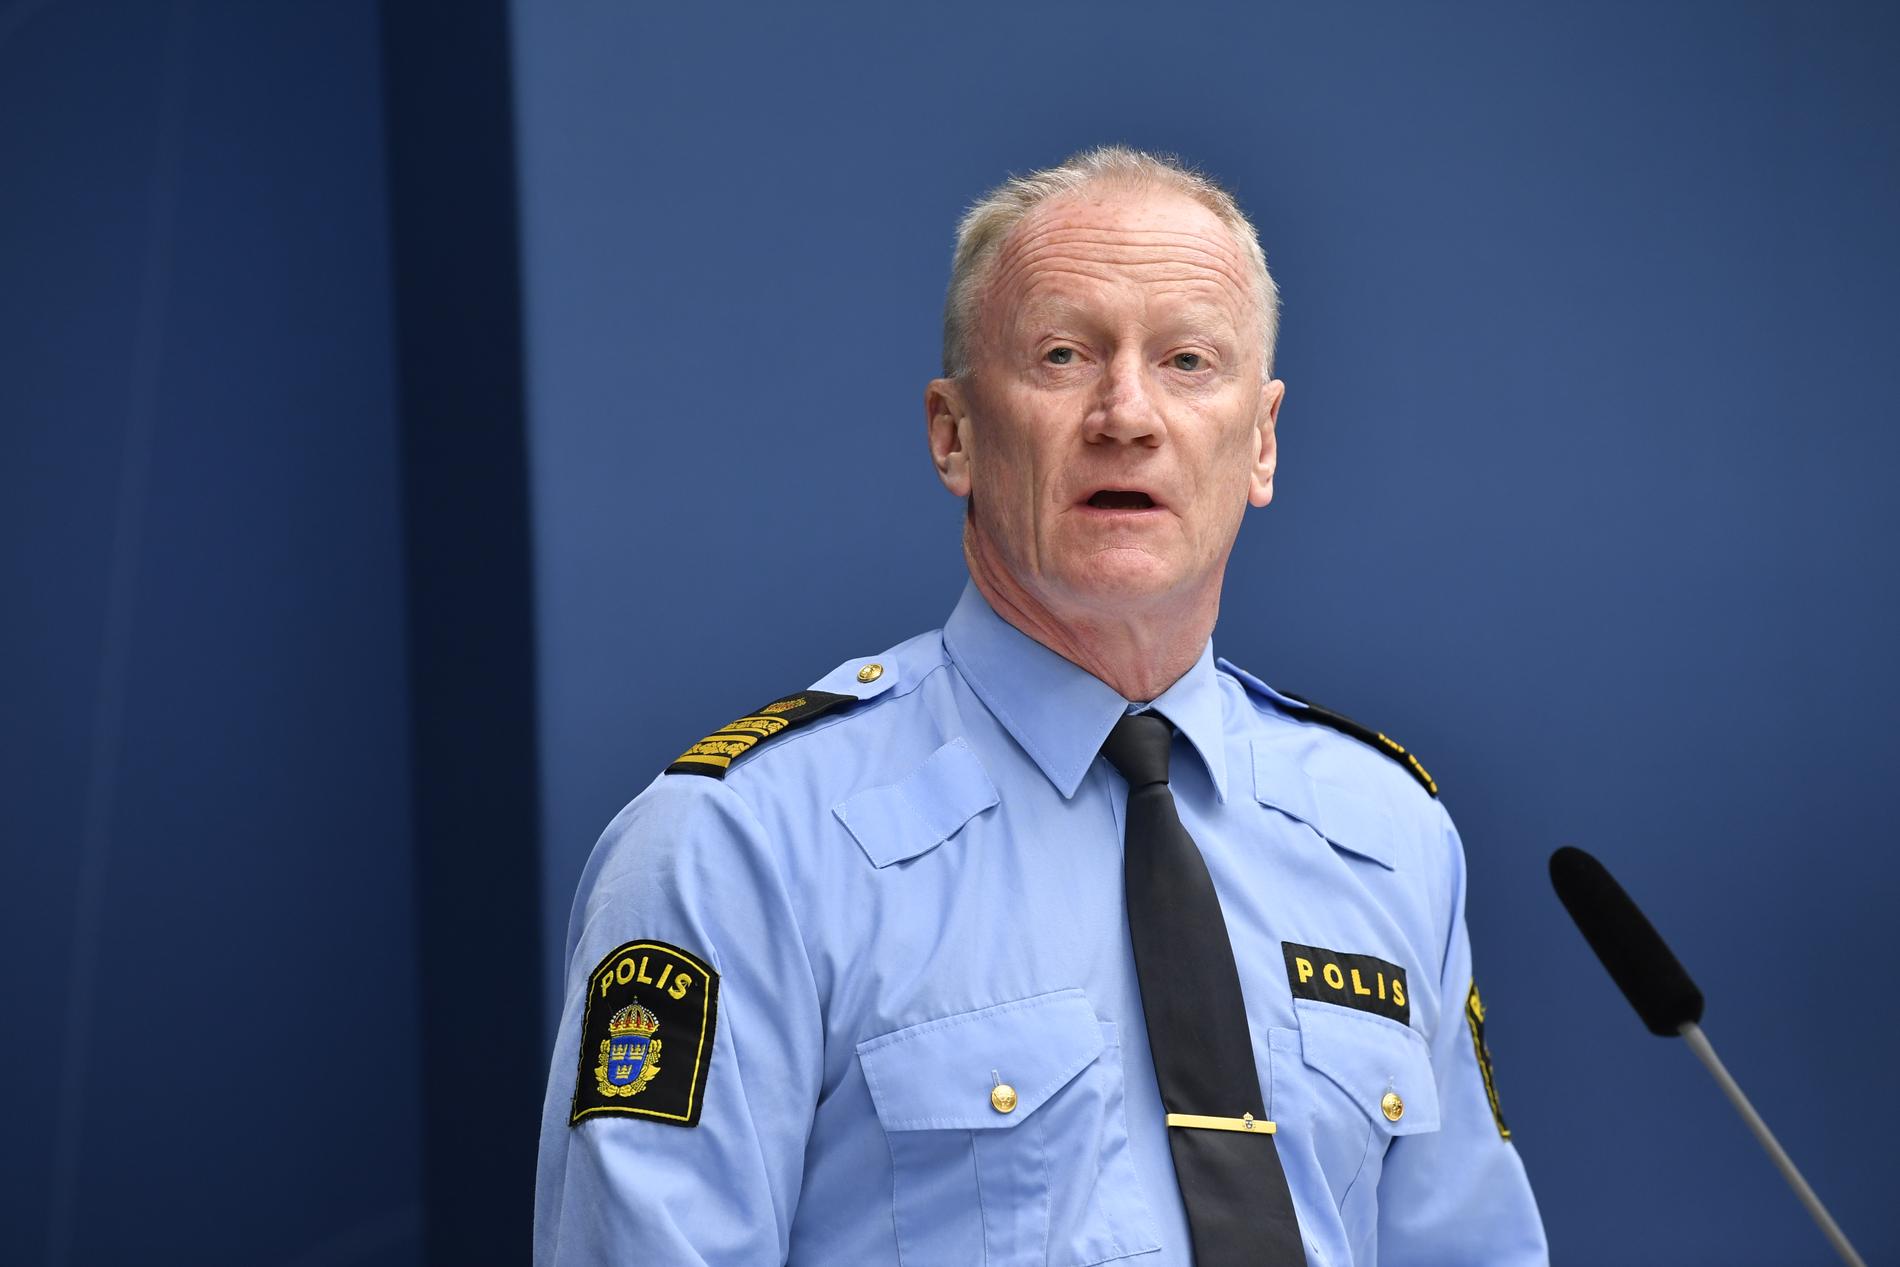 Polisöverintendent Per Engström.